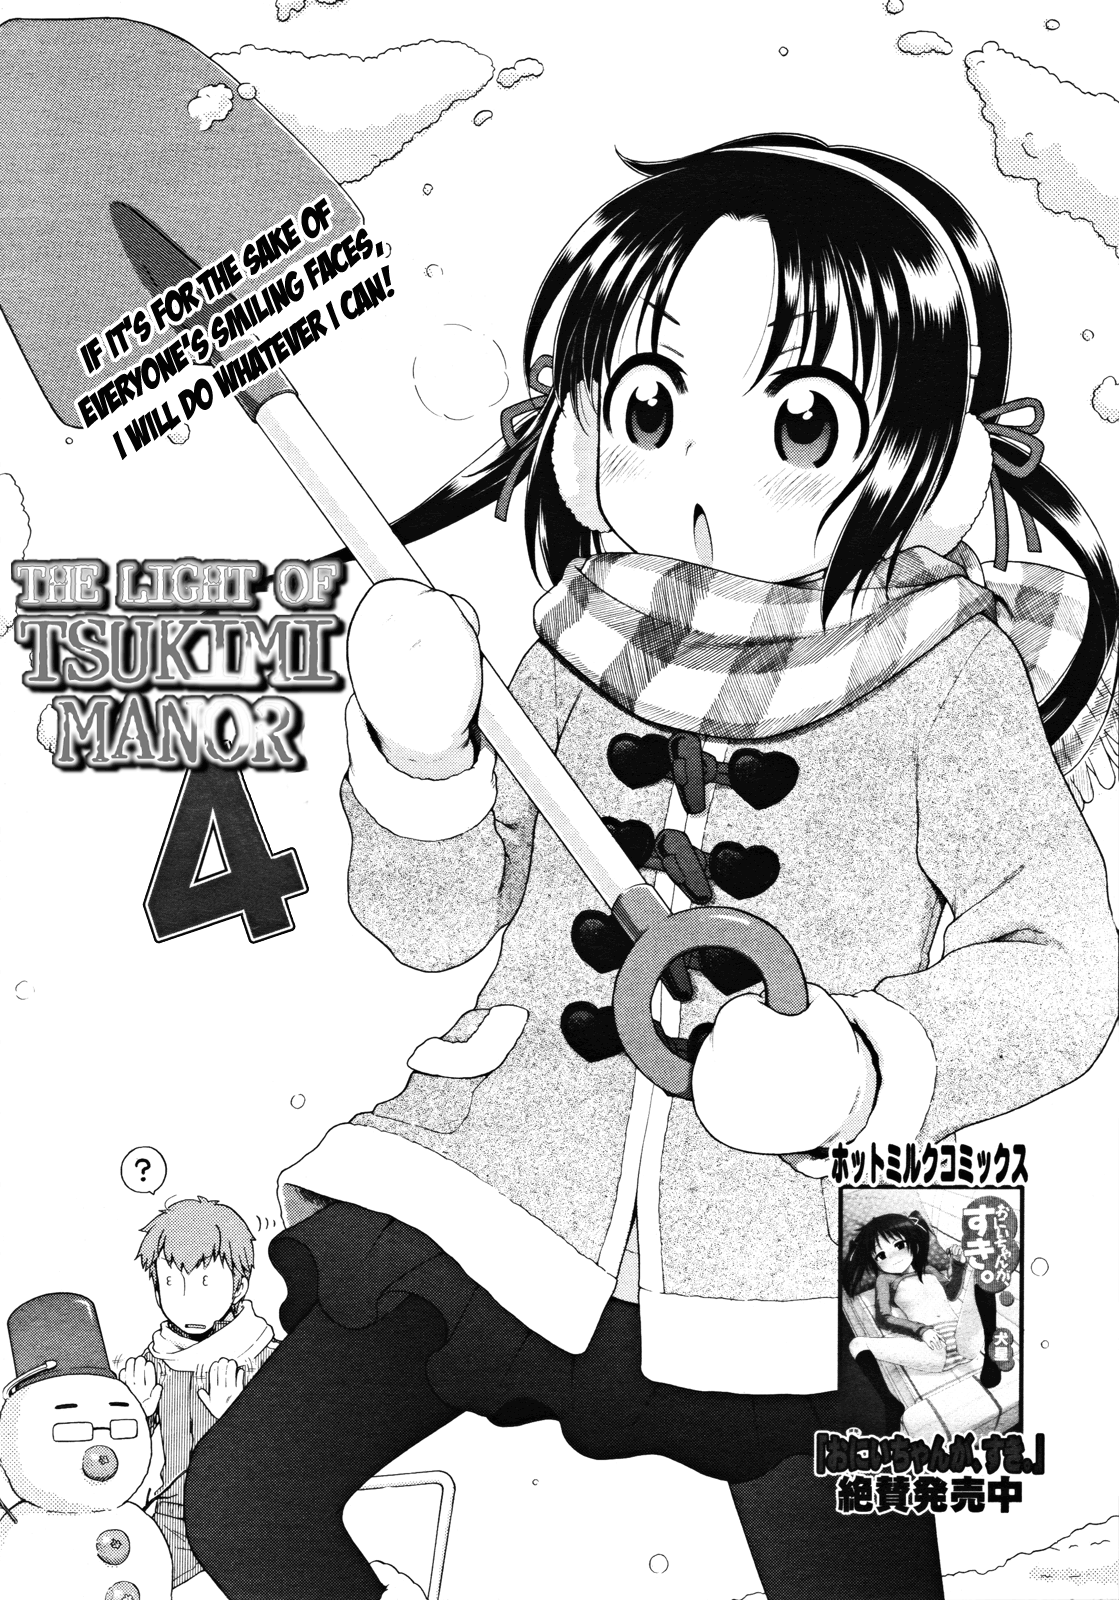 The Light of Tsukimi Manor 1-6 hentai manga picture 71